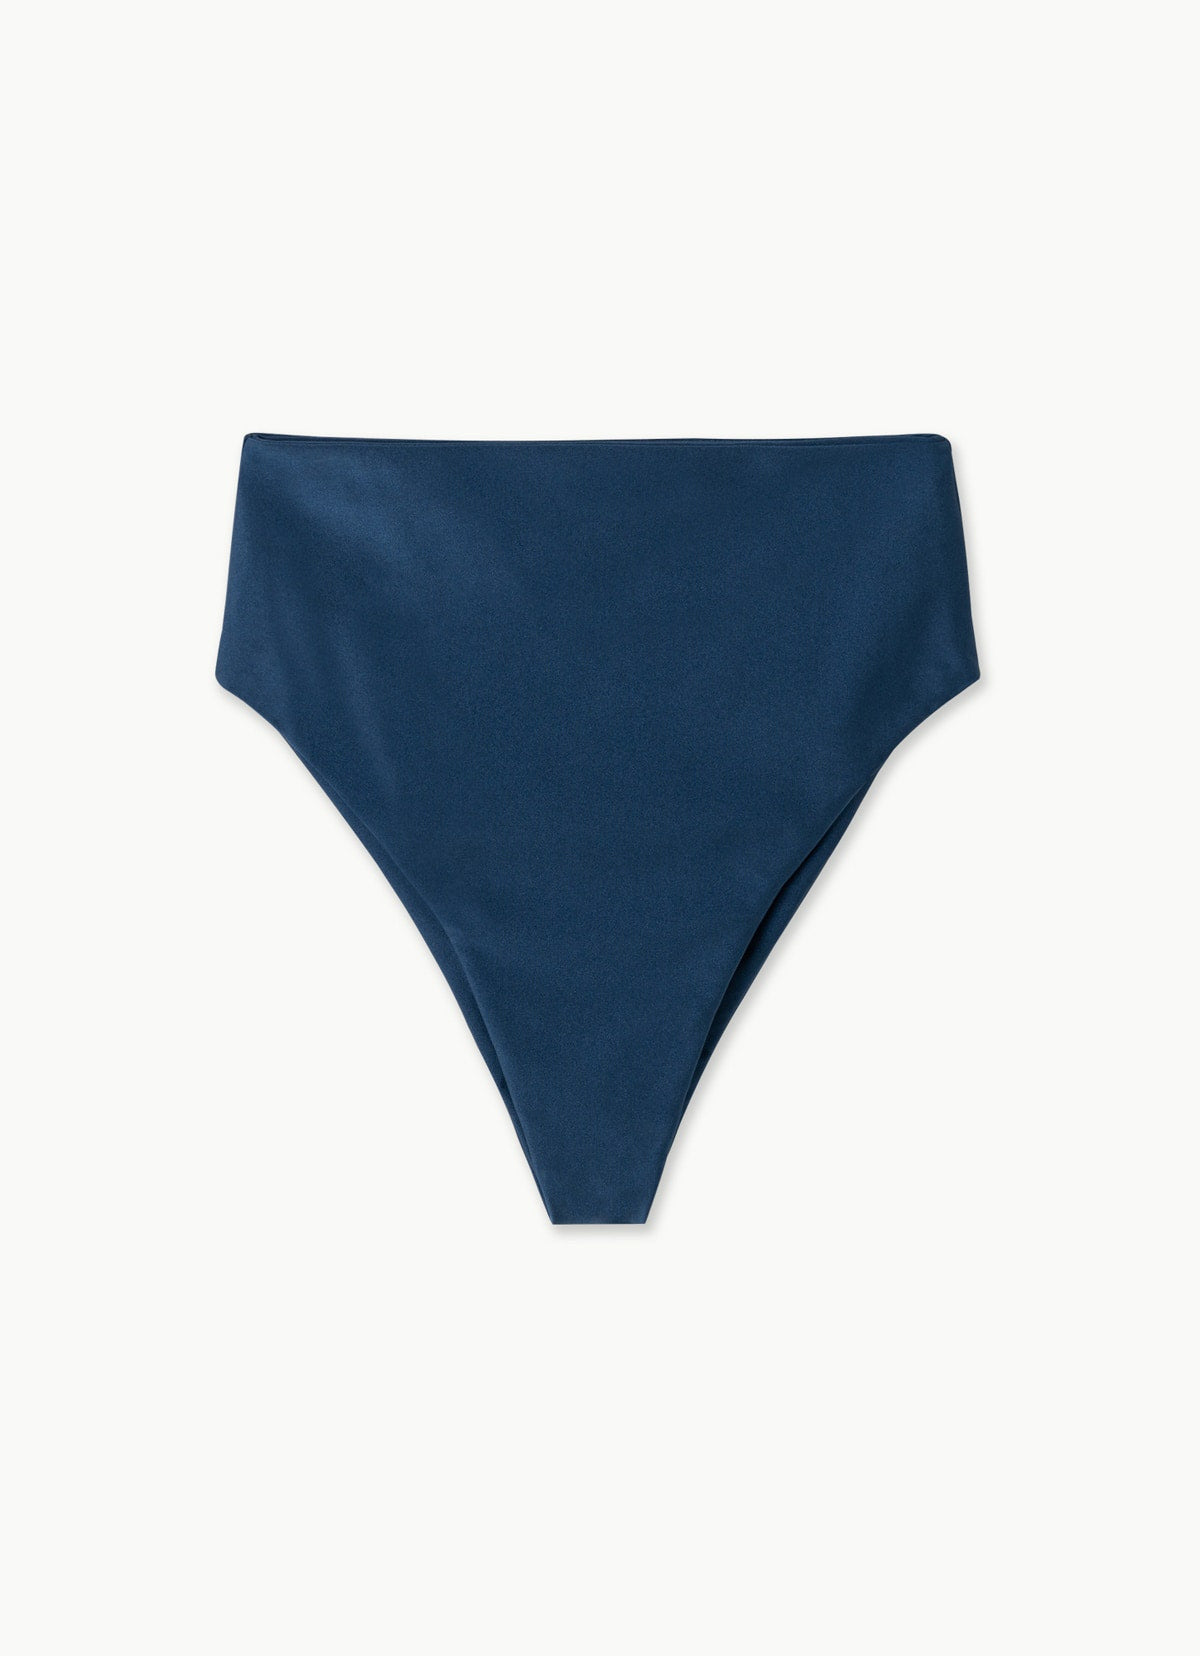 Verano bikini bottom_Deep Blue